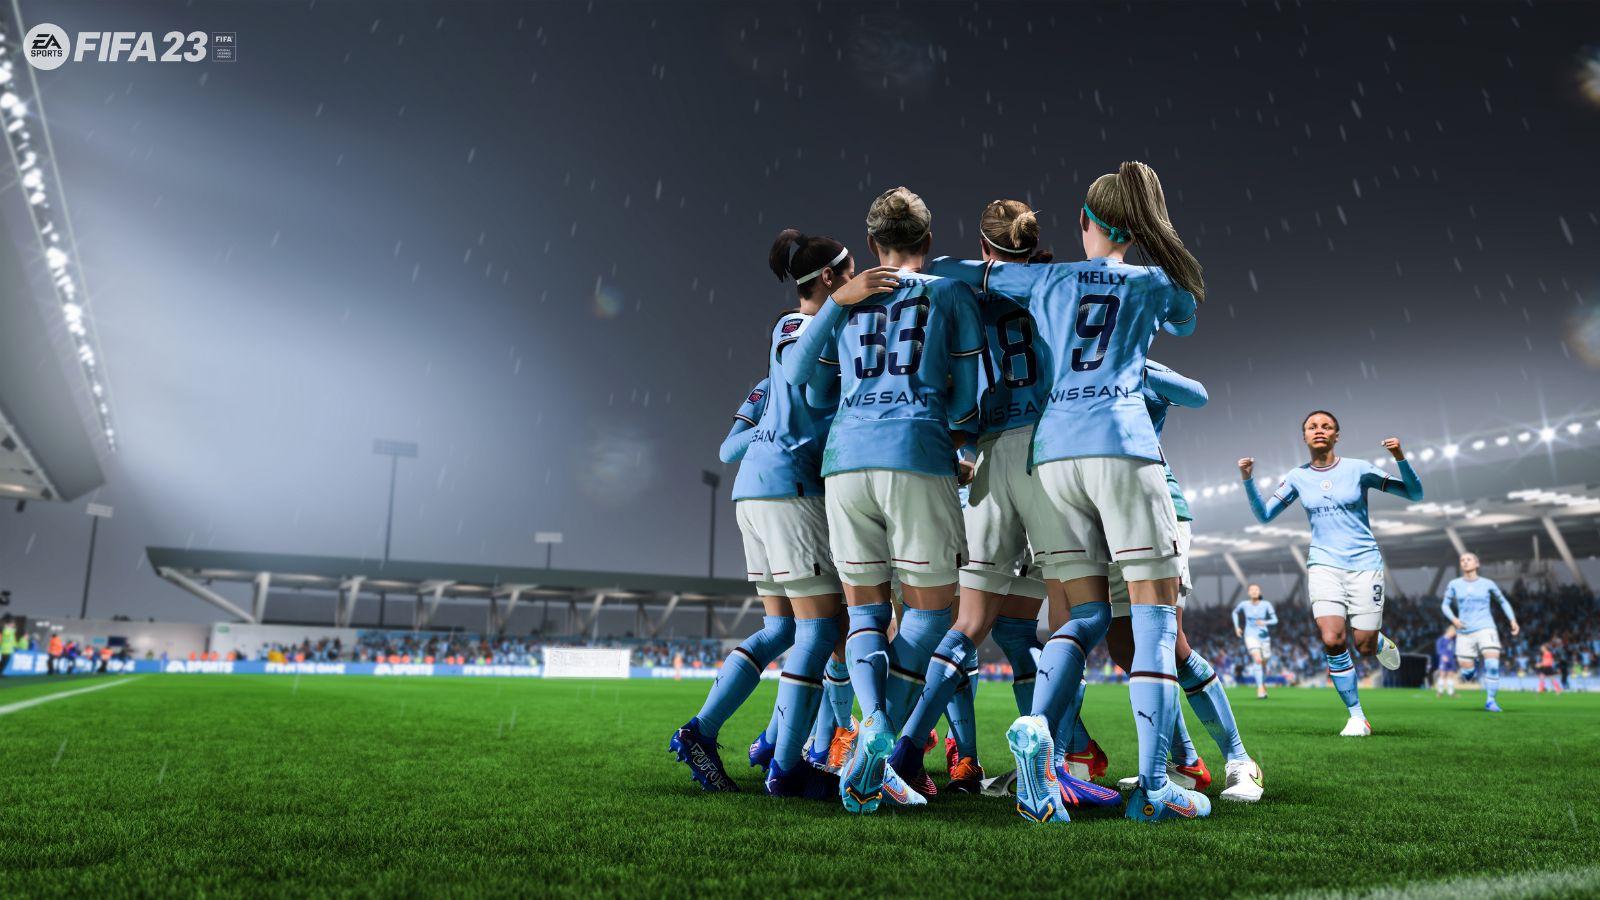 FIFA 23 Manchester City women's team celebrating